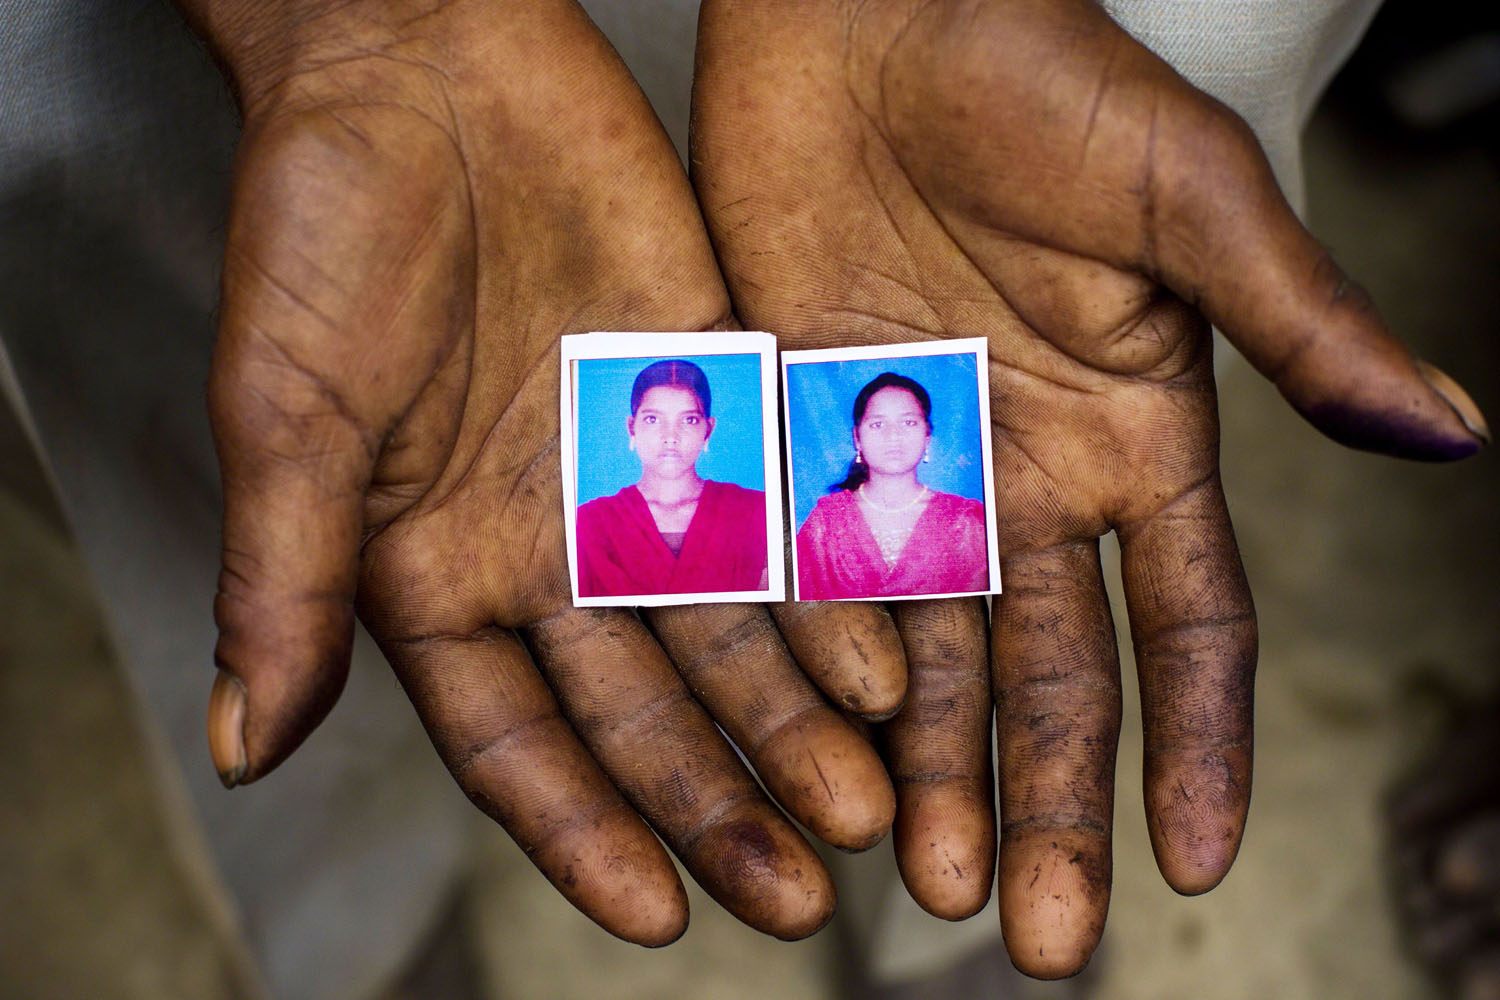 Teenage girls gangraped and hung in India